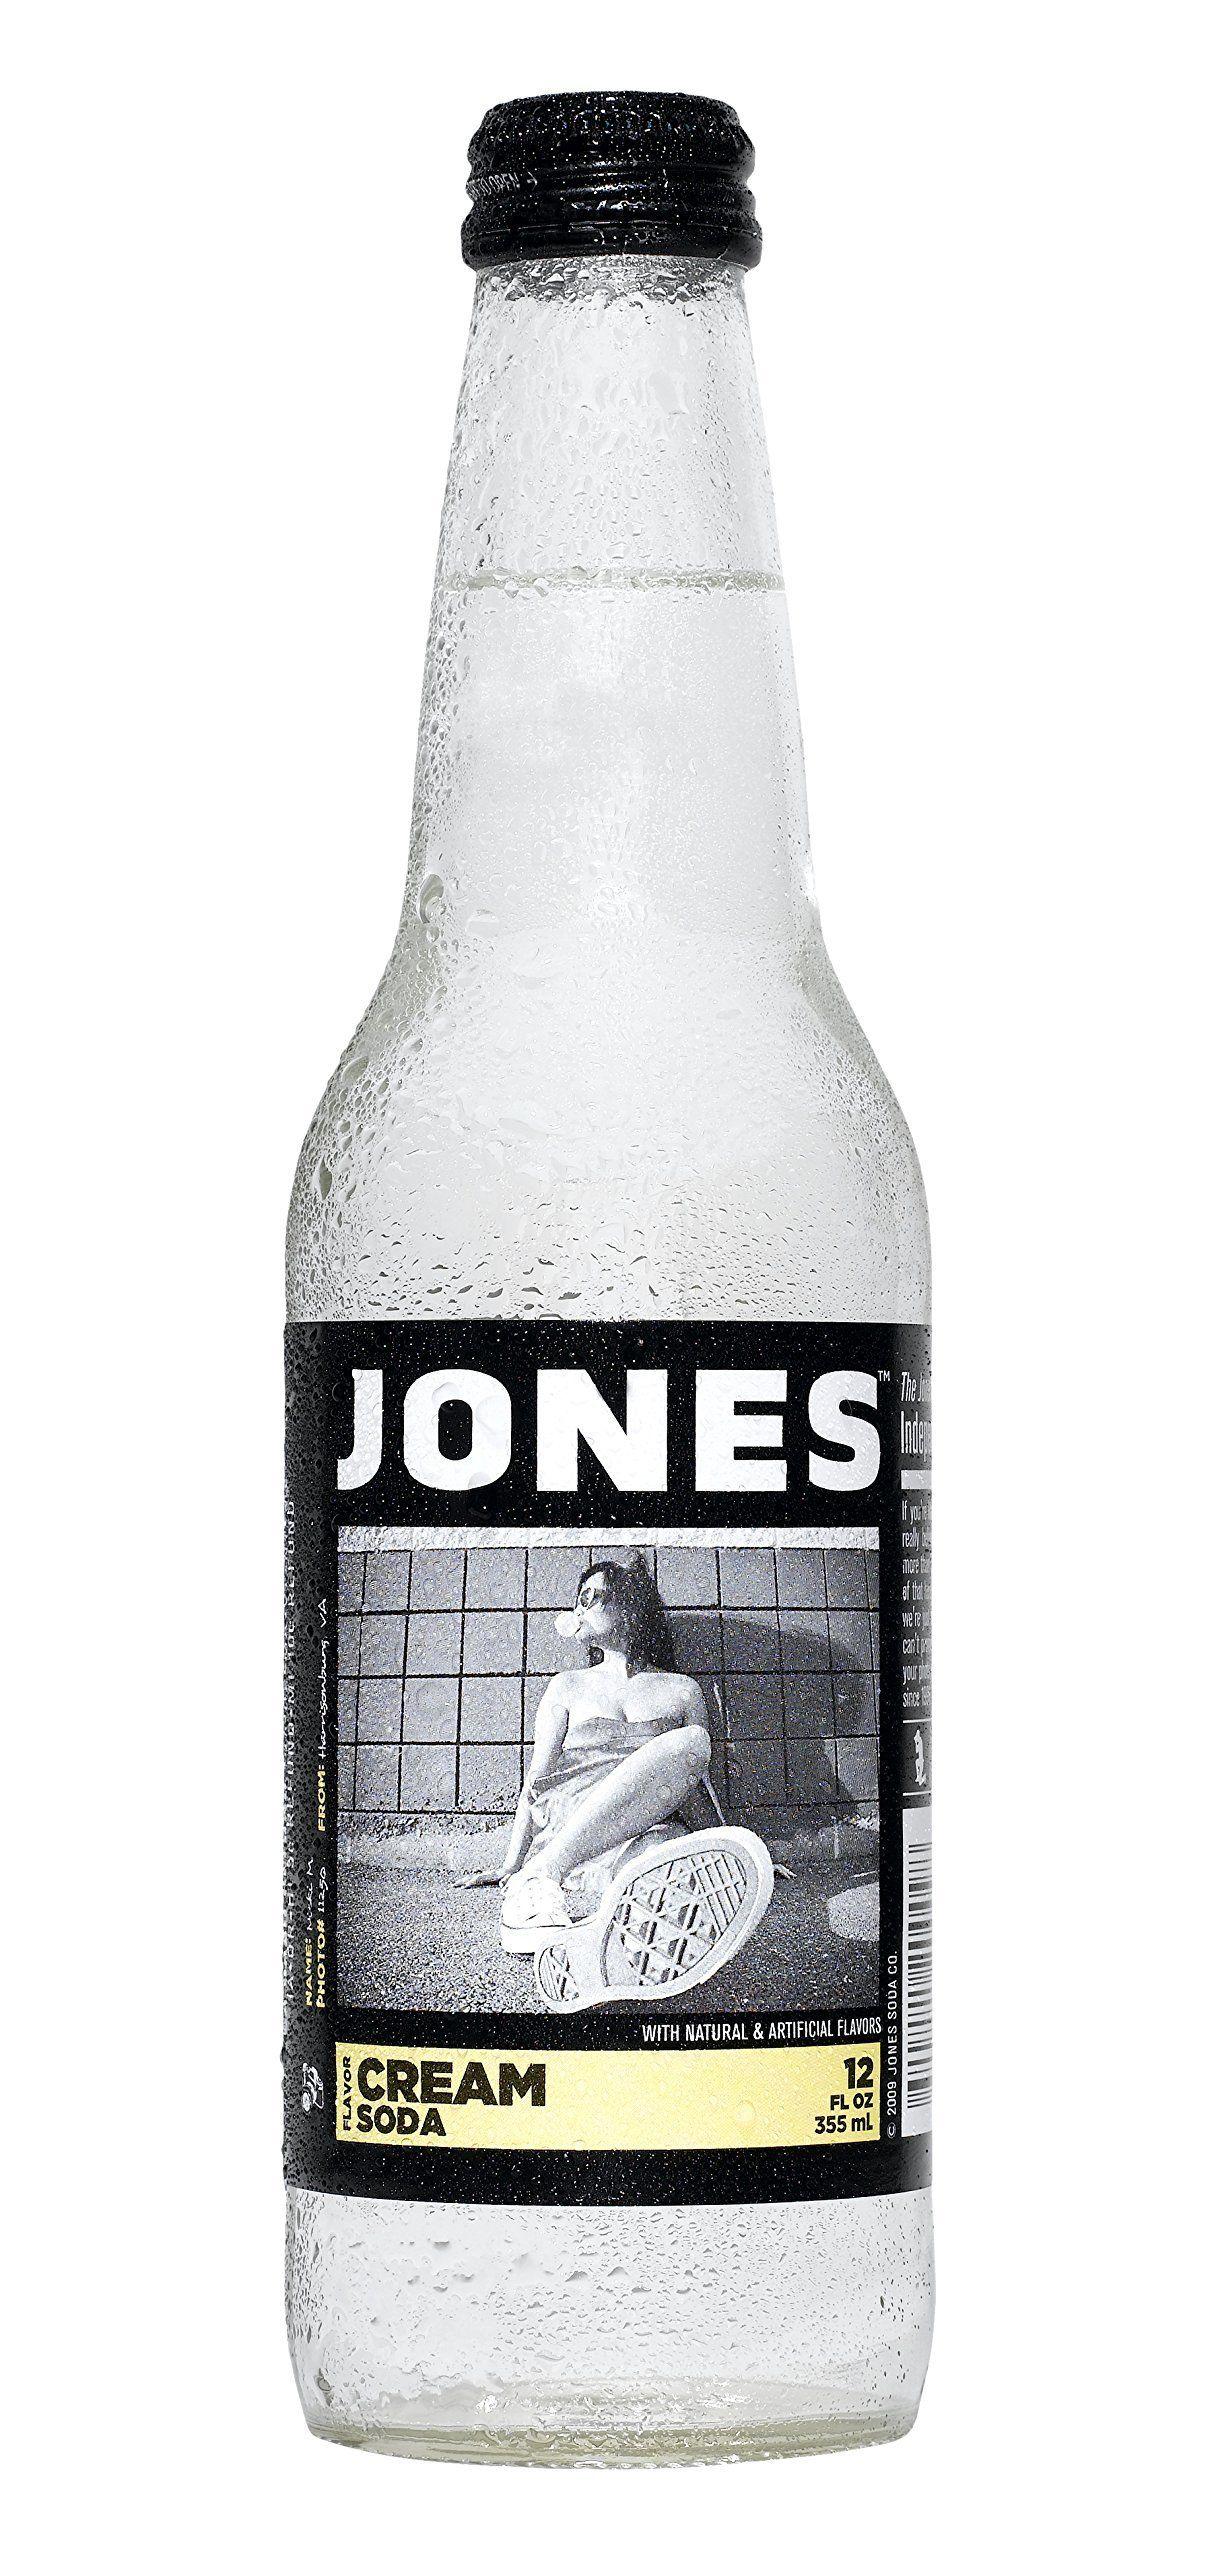 Jones Soda Logo - Amazon.com : Jones Soda 12 Pack Of Jones Pure Cane Cream Soda